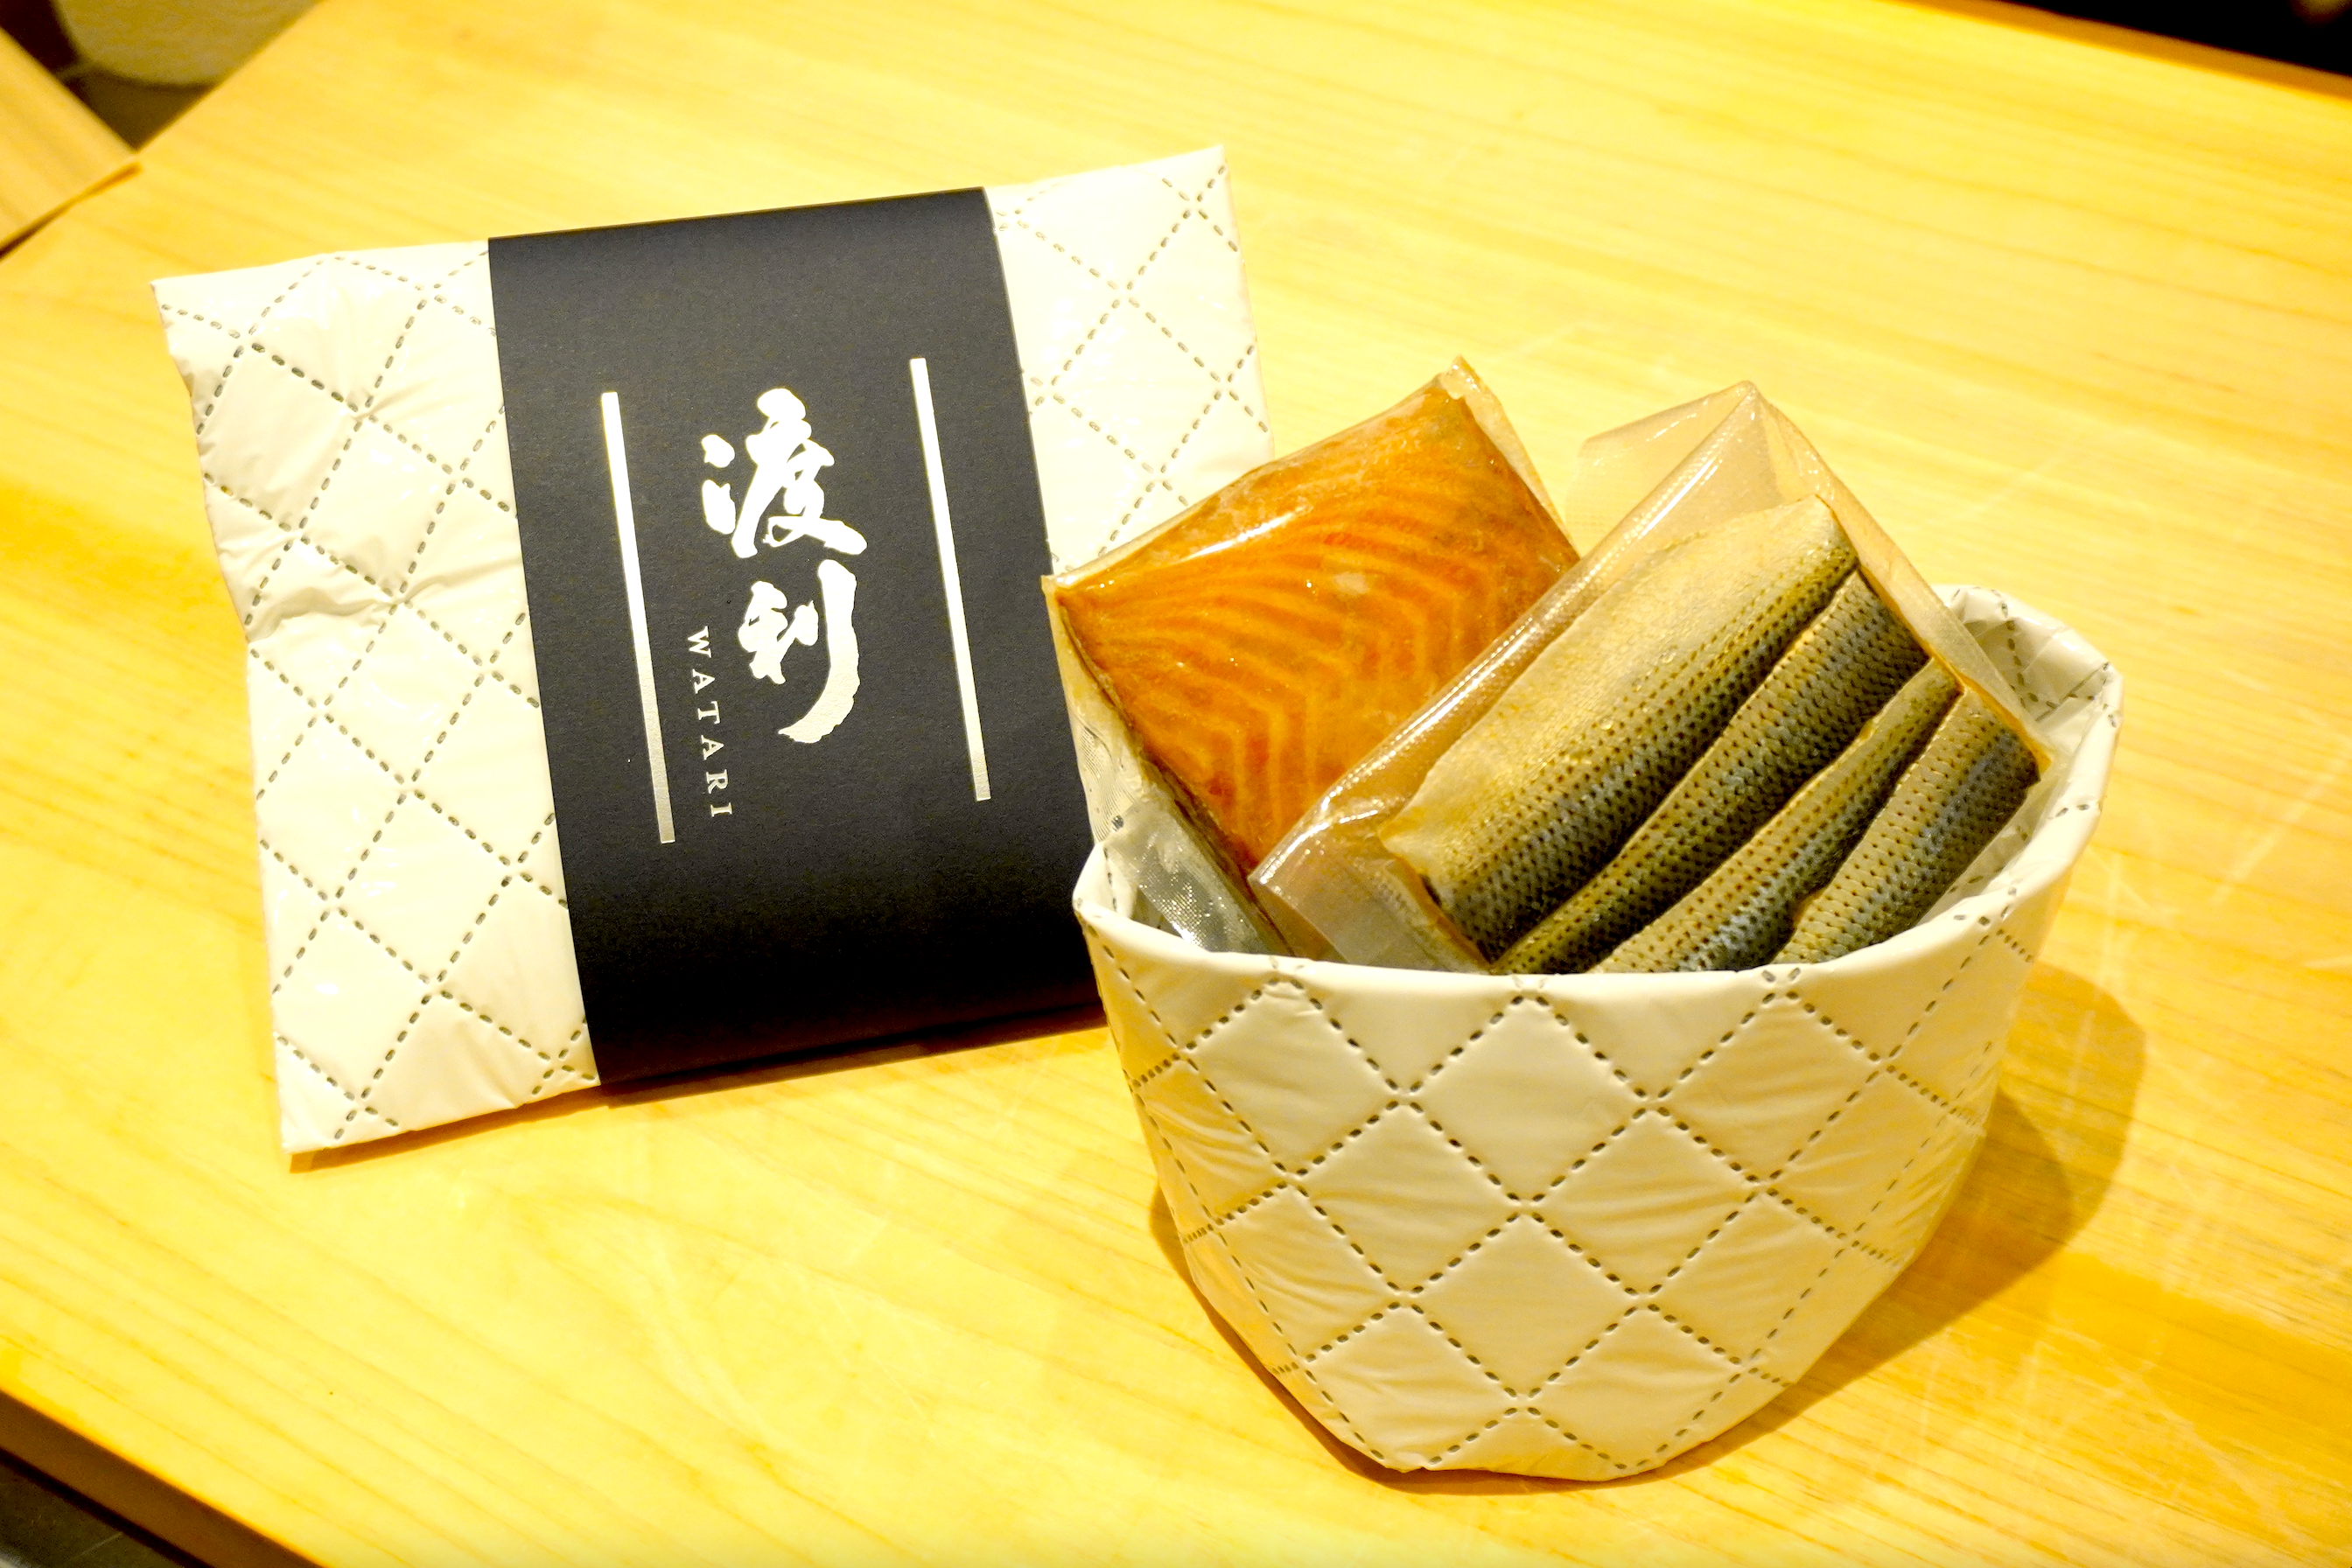 Assortment of cherry salmon Kohada (cherry salmon × 1 Kohada × 1)